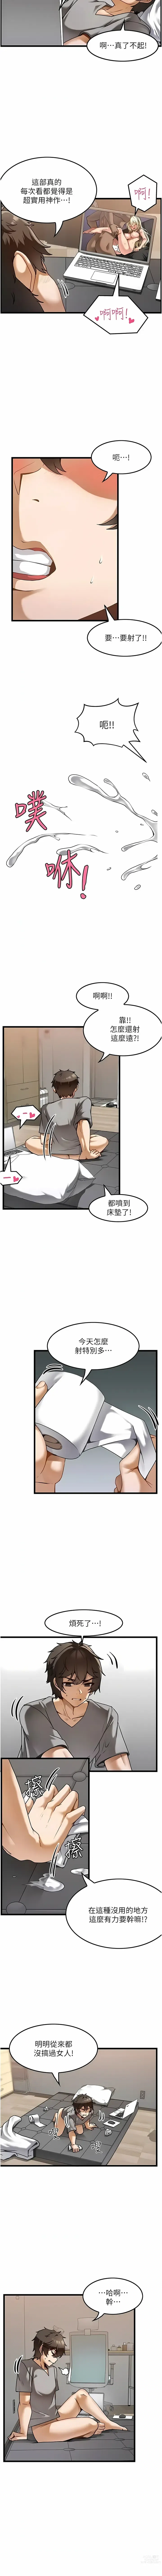 Page 7 of manga 頂級按摩師 1-51